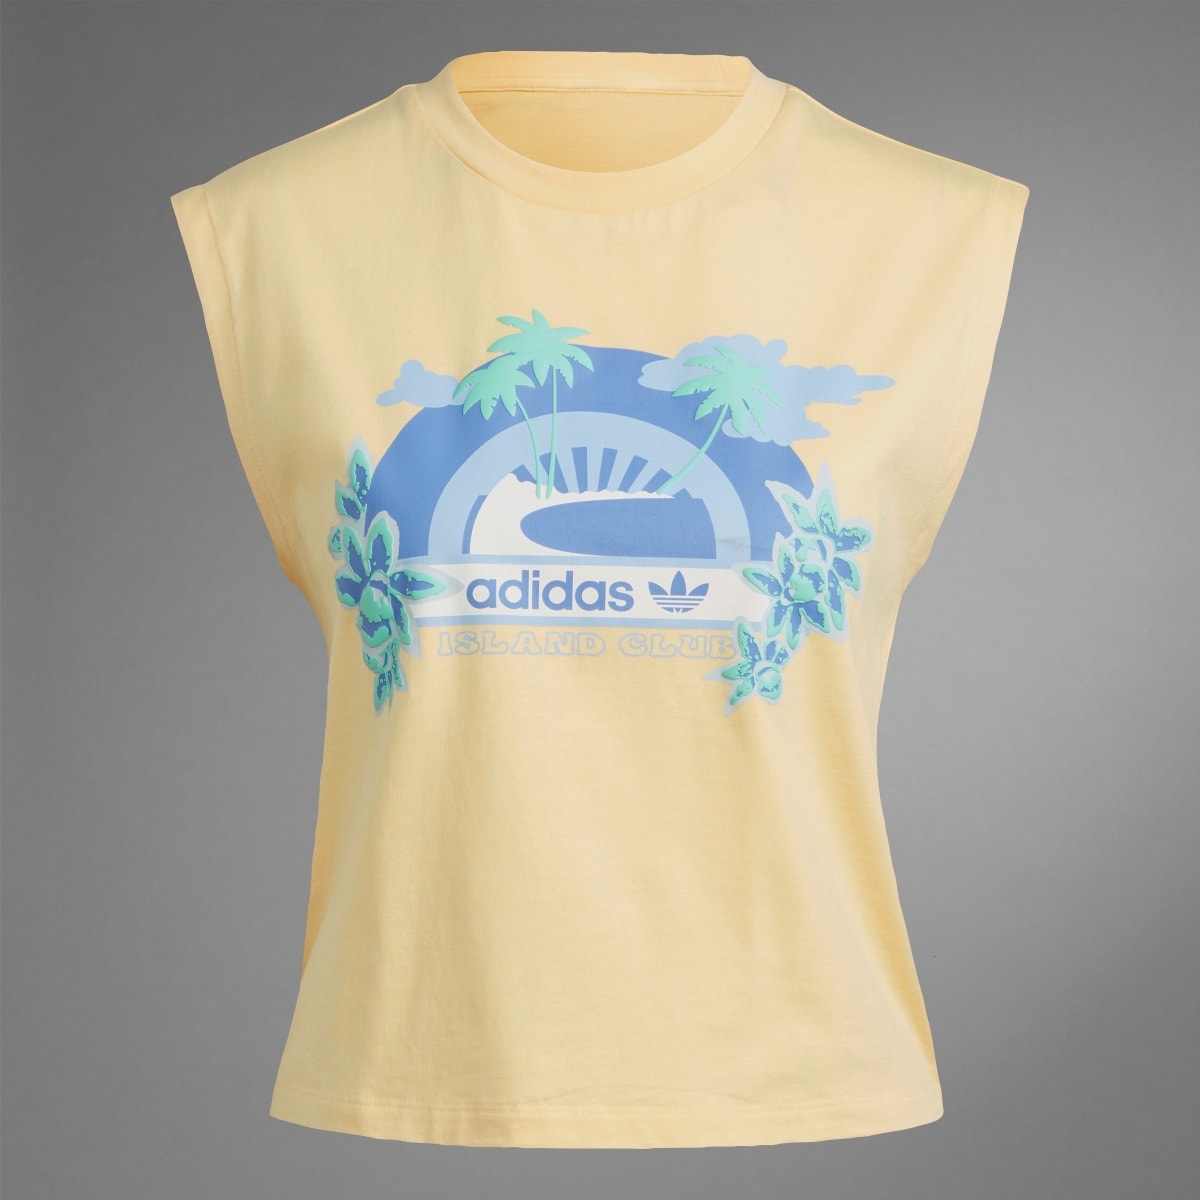 Adidas Island Club Sleeveless Graphic T-Shirt. 10